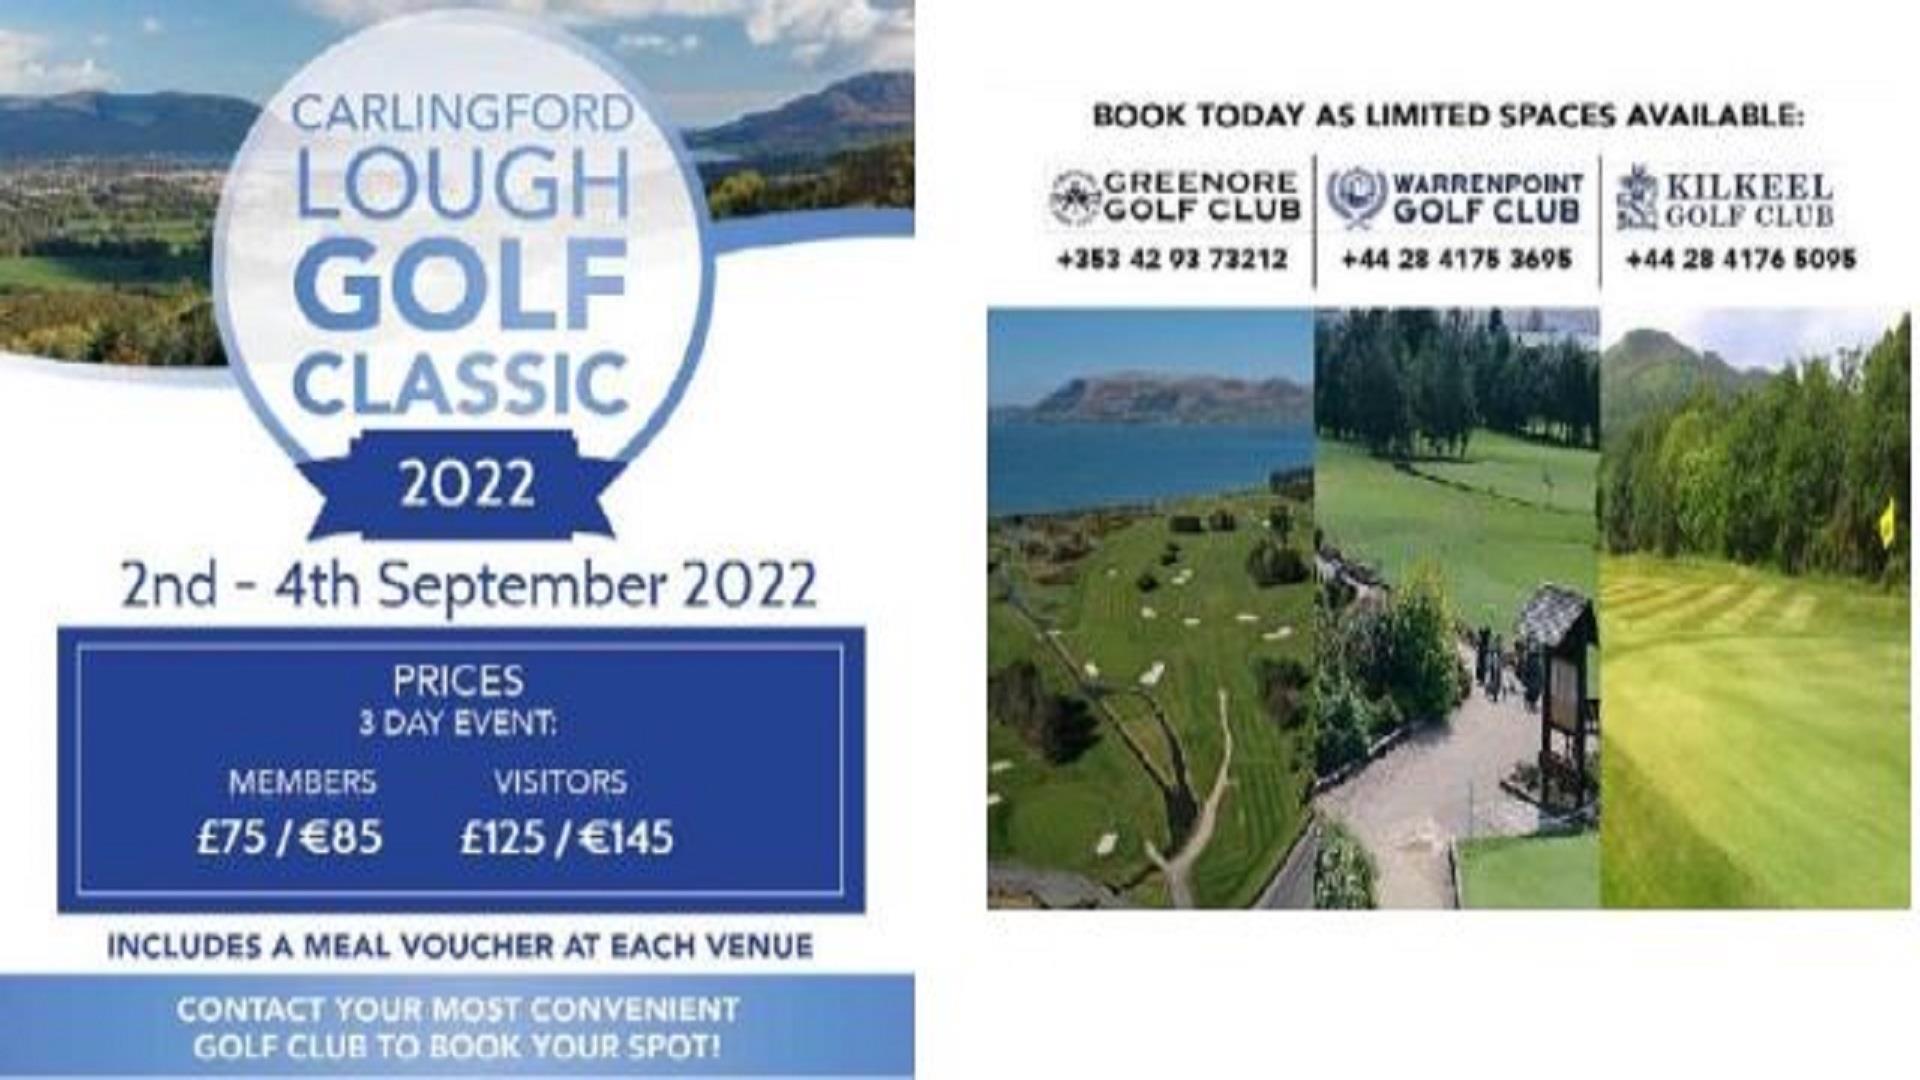 Carlingford Lough Golf Classic poster image